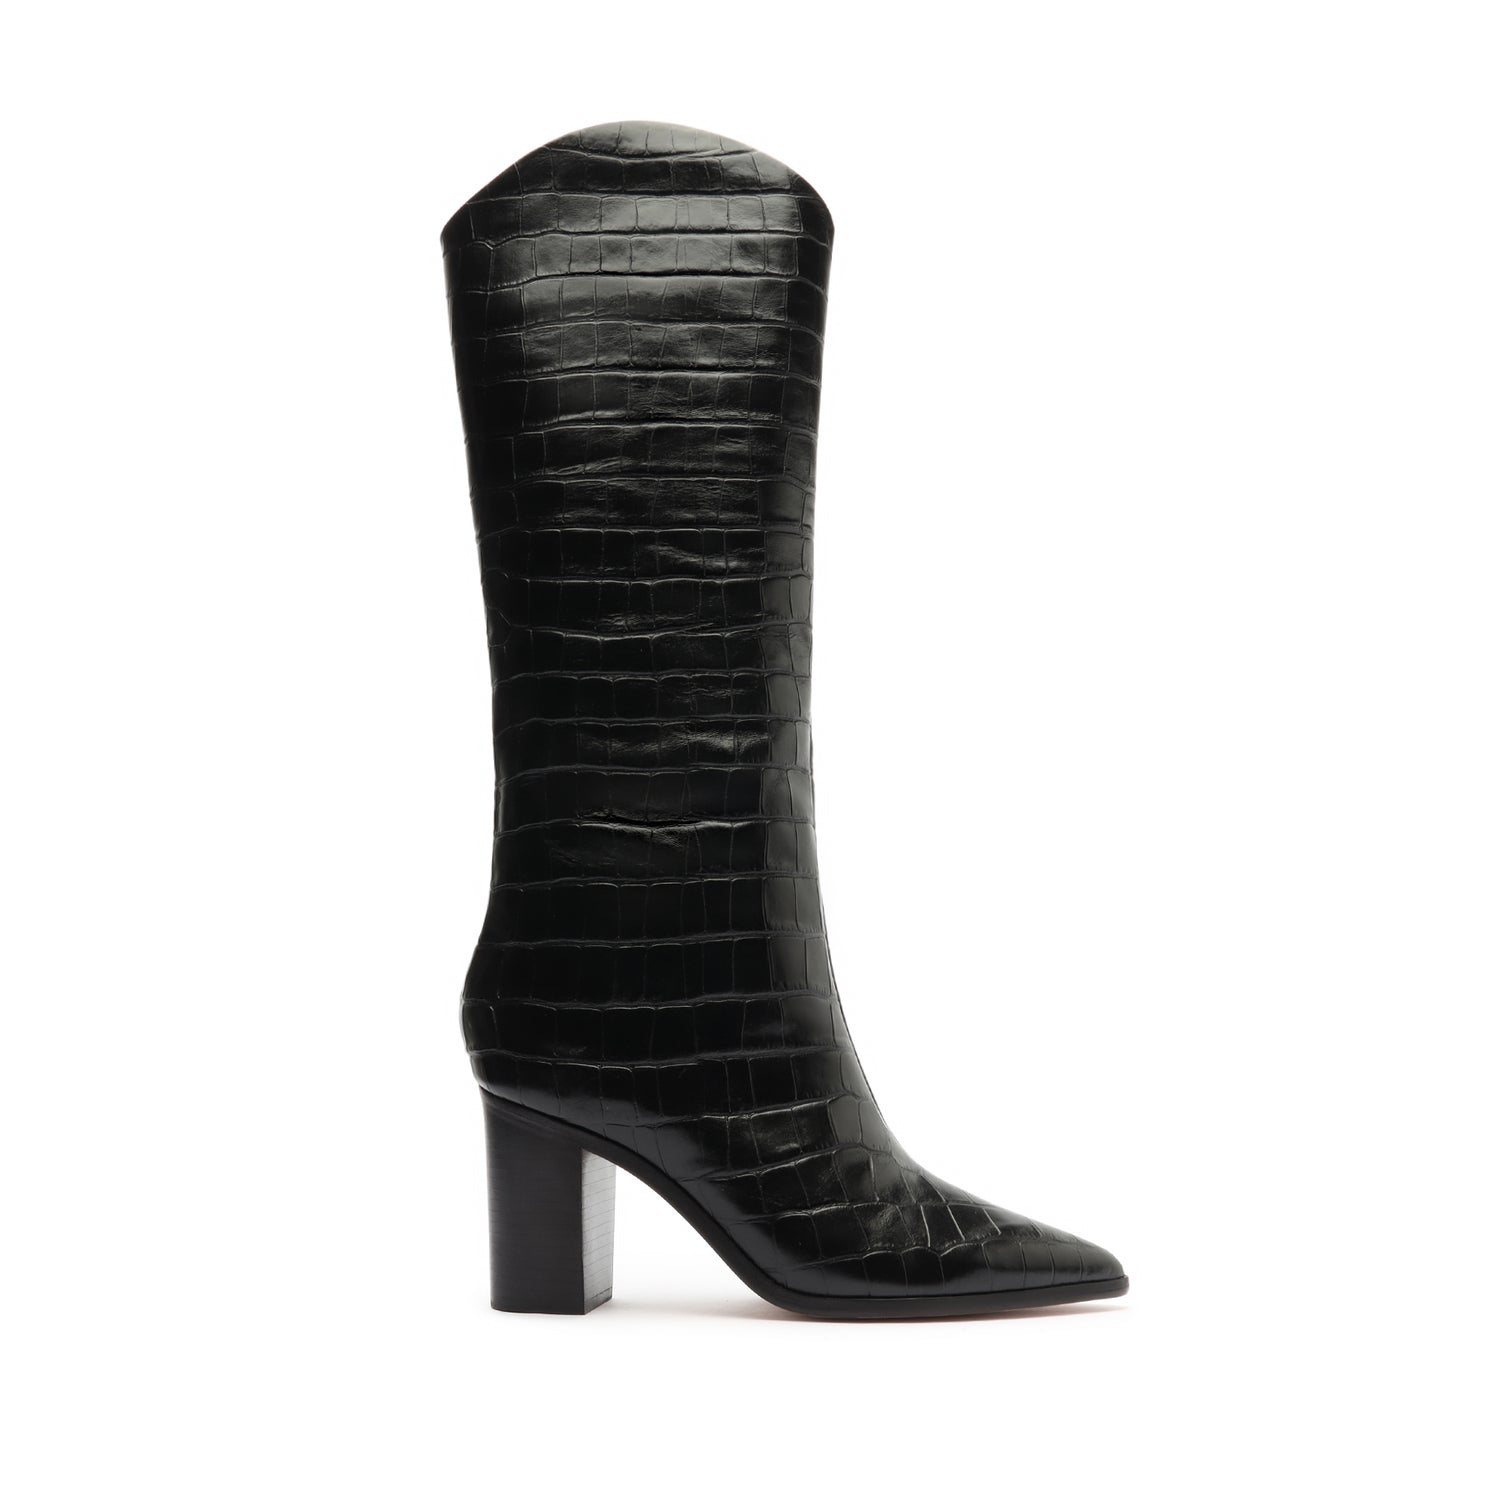 Maryana Block Wide Crocodile Boot Boots CO 5 Black Crocodile-Embossed Leather - Schutz Shoes